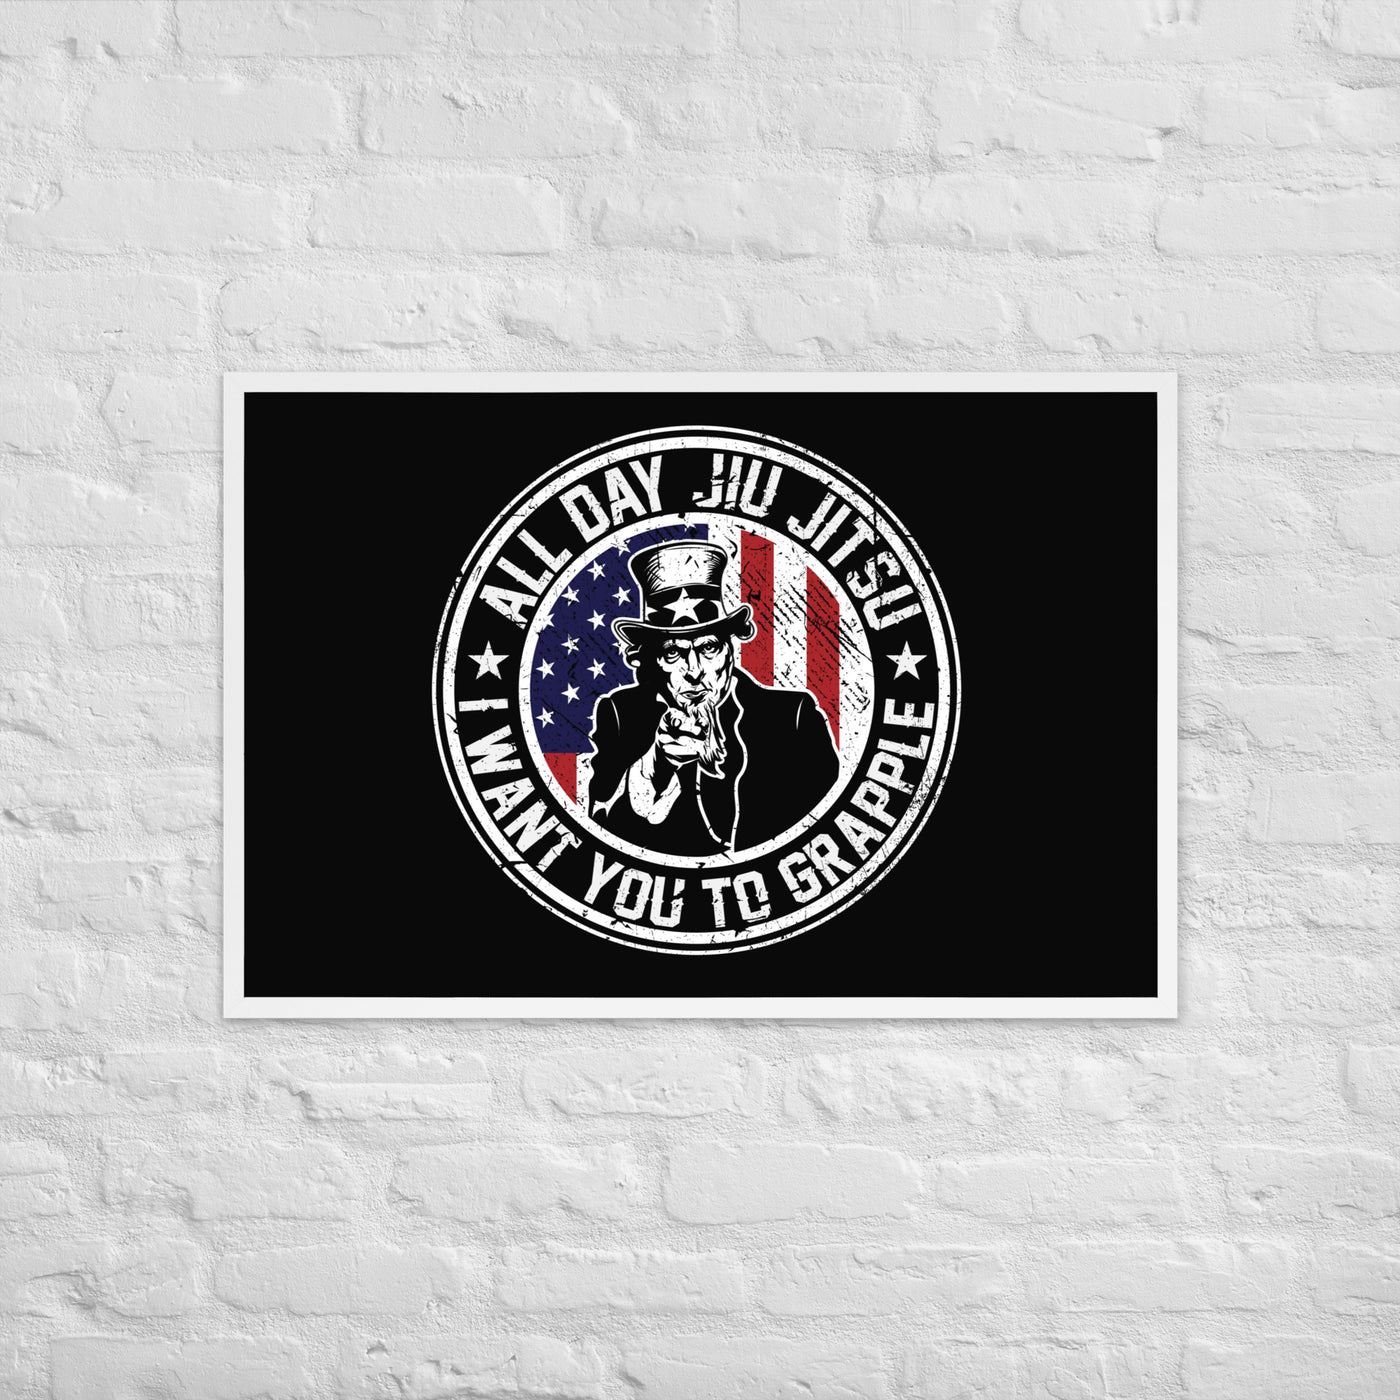 Uncle Sam All Day Jiu Jitsu Framed poster